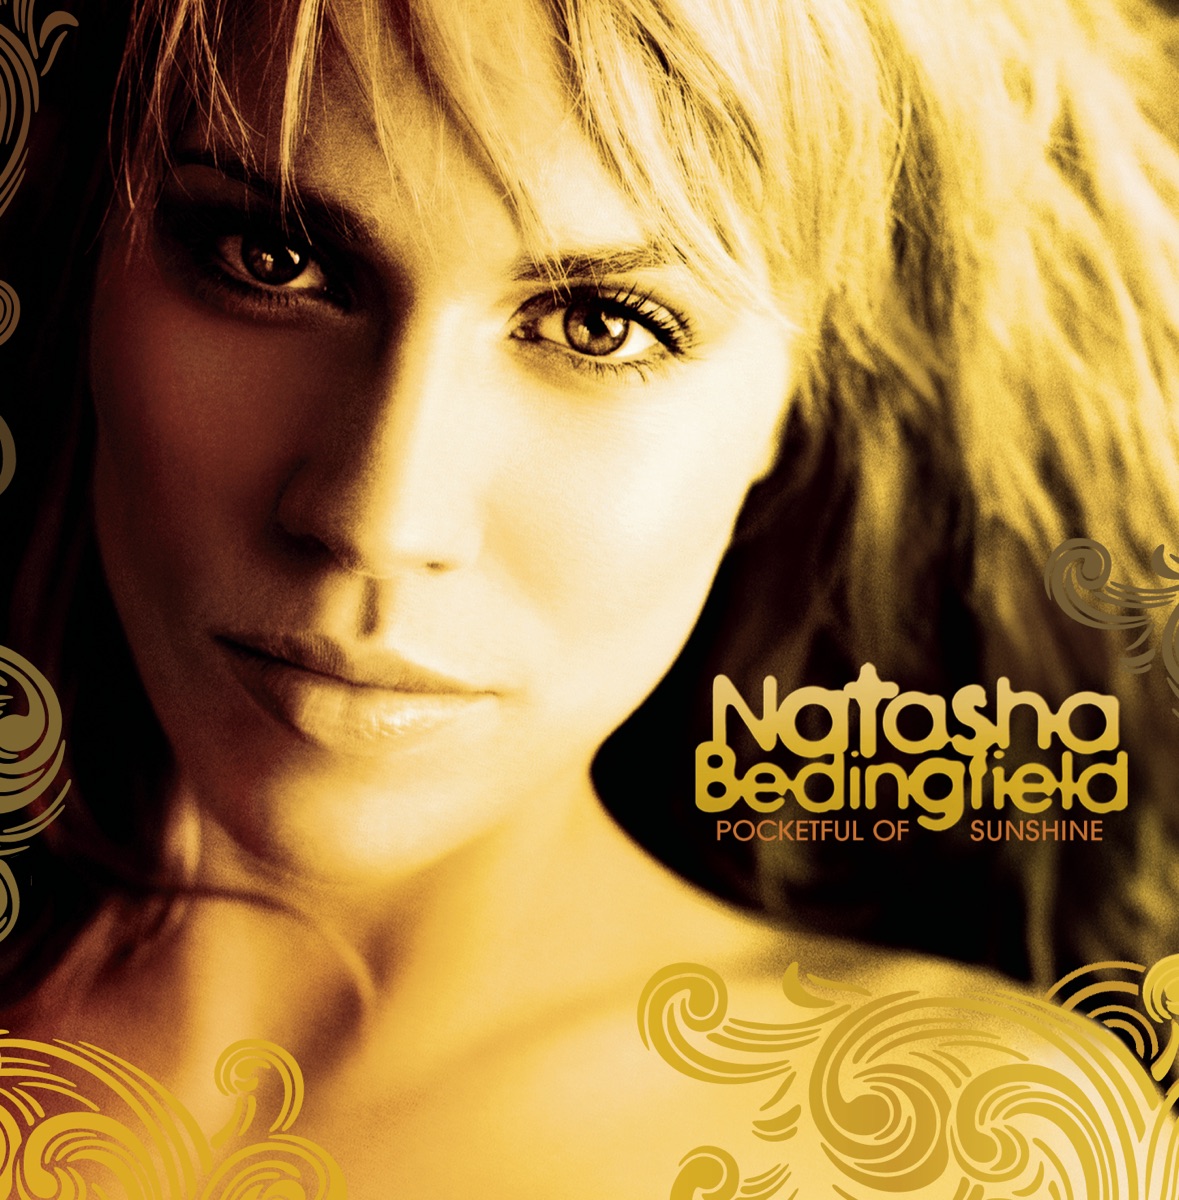 Pocketful Of Sunshine by Natasha Bedingfield on Apple Music